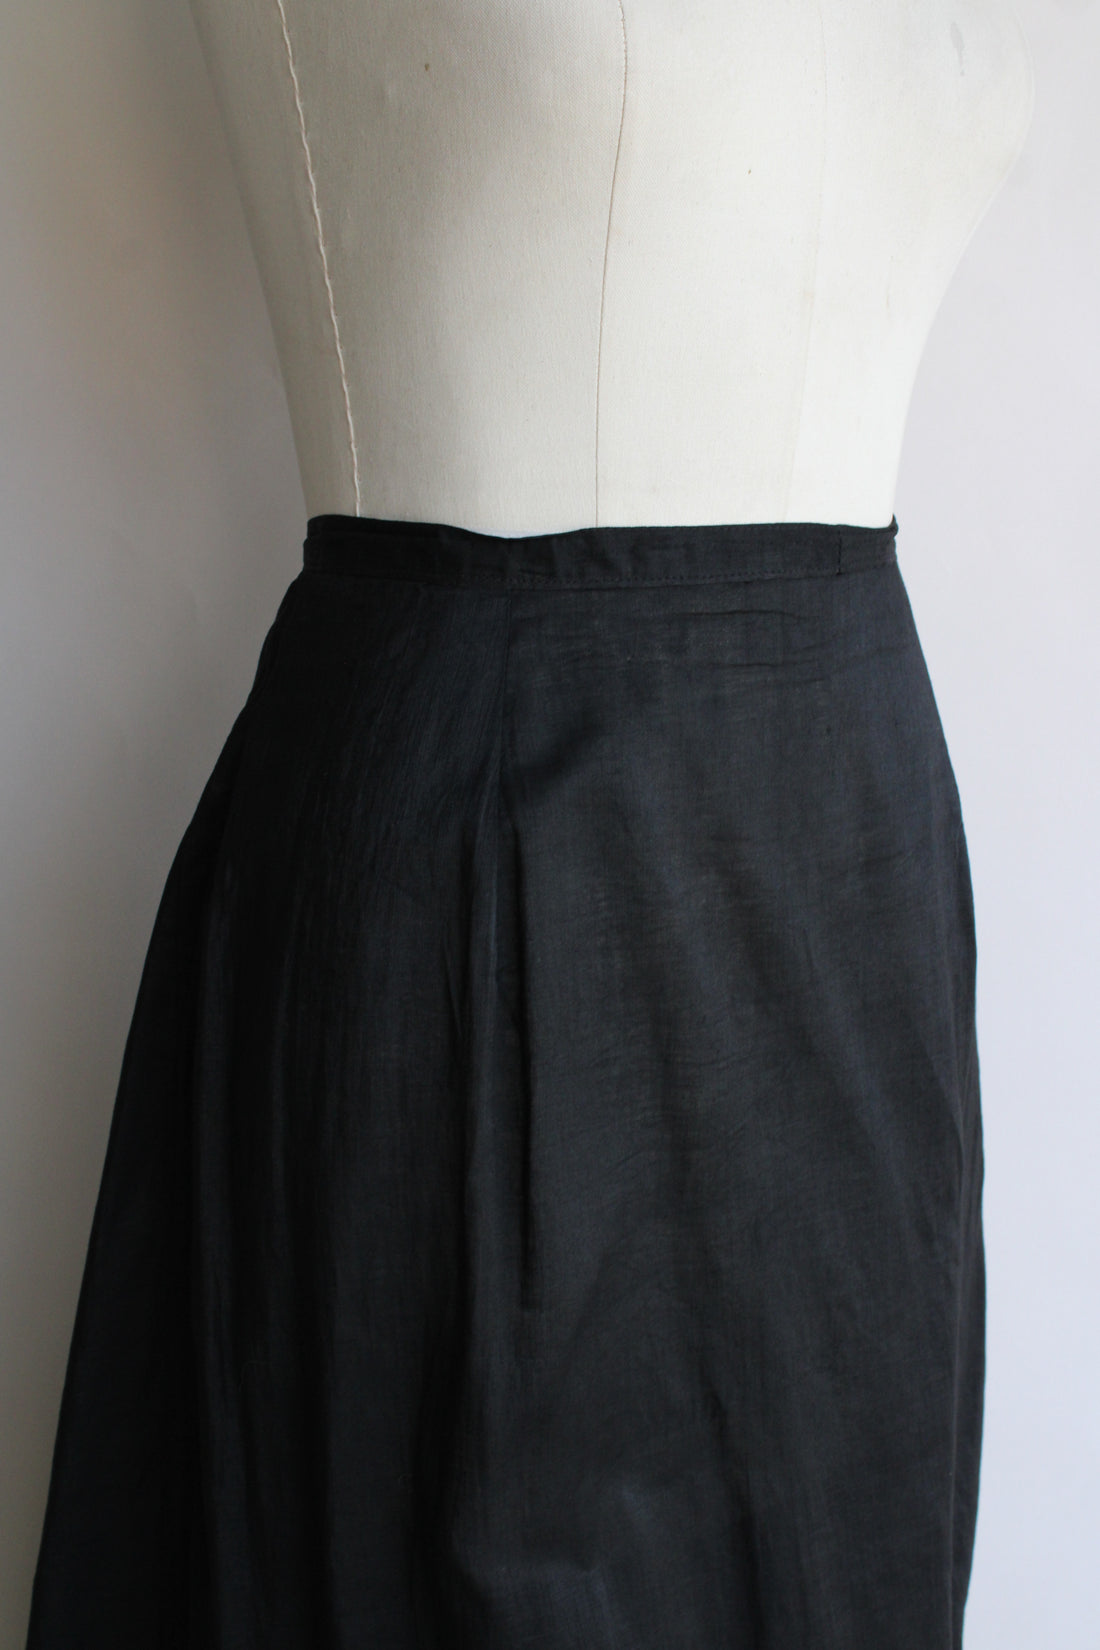 Antique Edwardian Black Mourning Skirt or Petticoat – Toadstool Farm ...